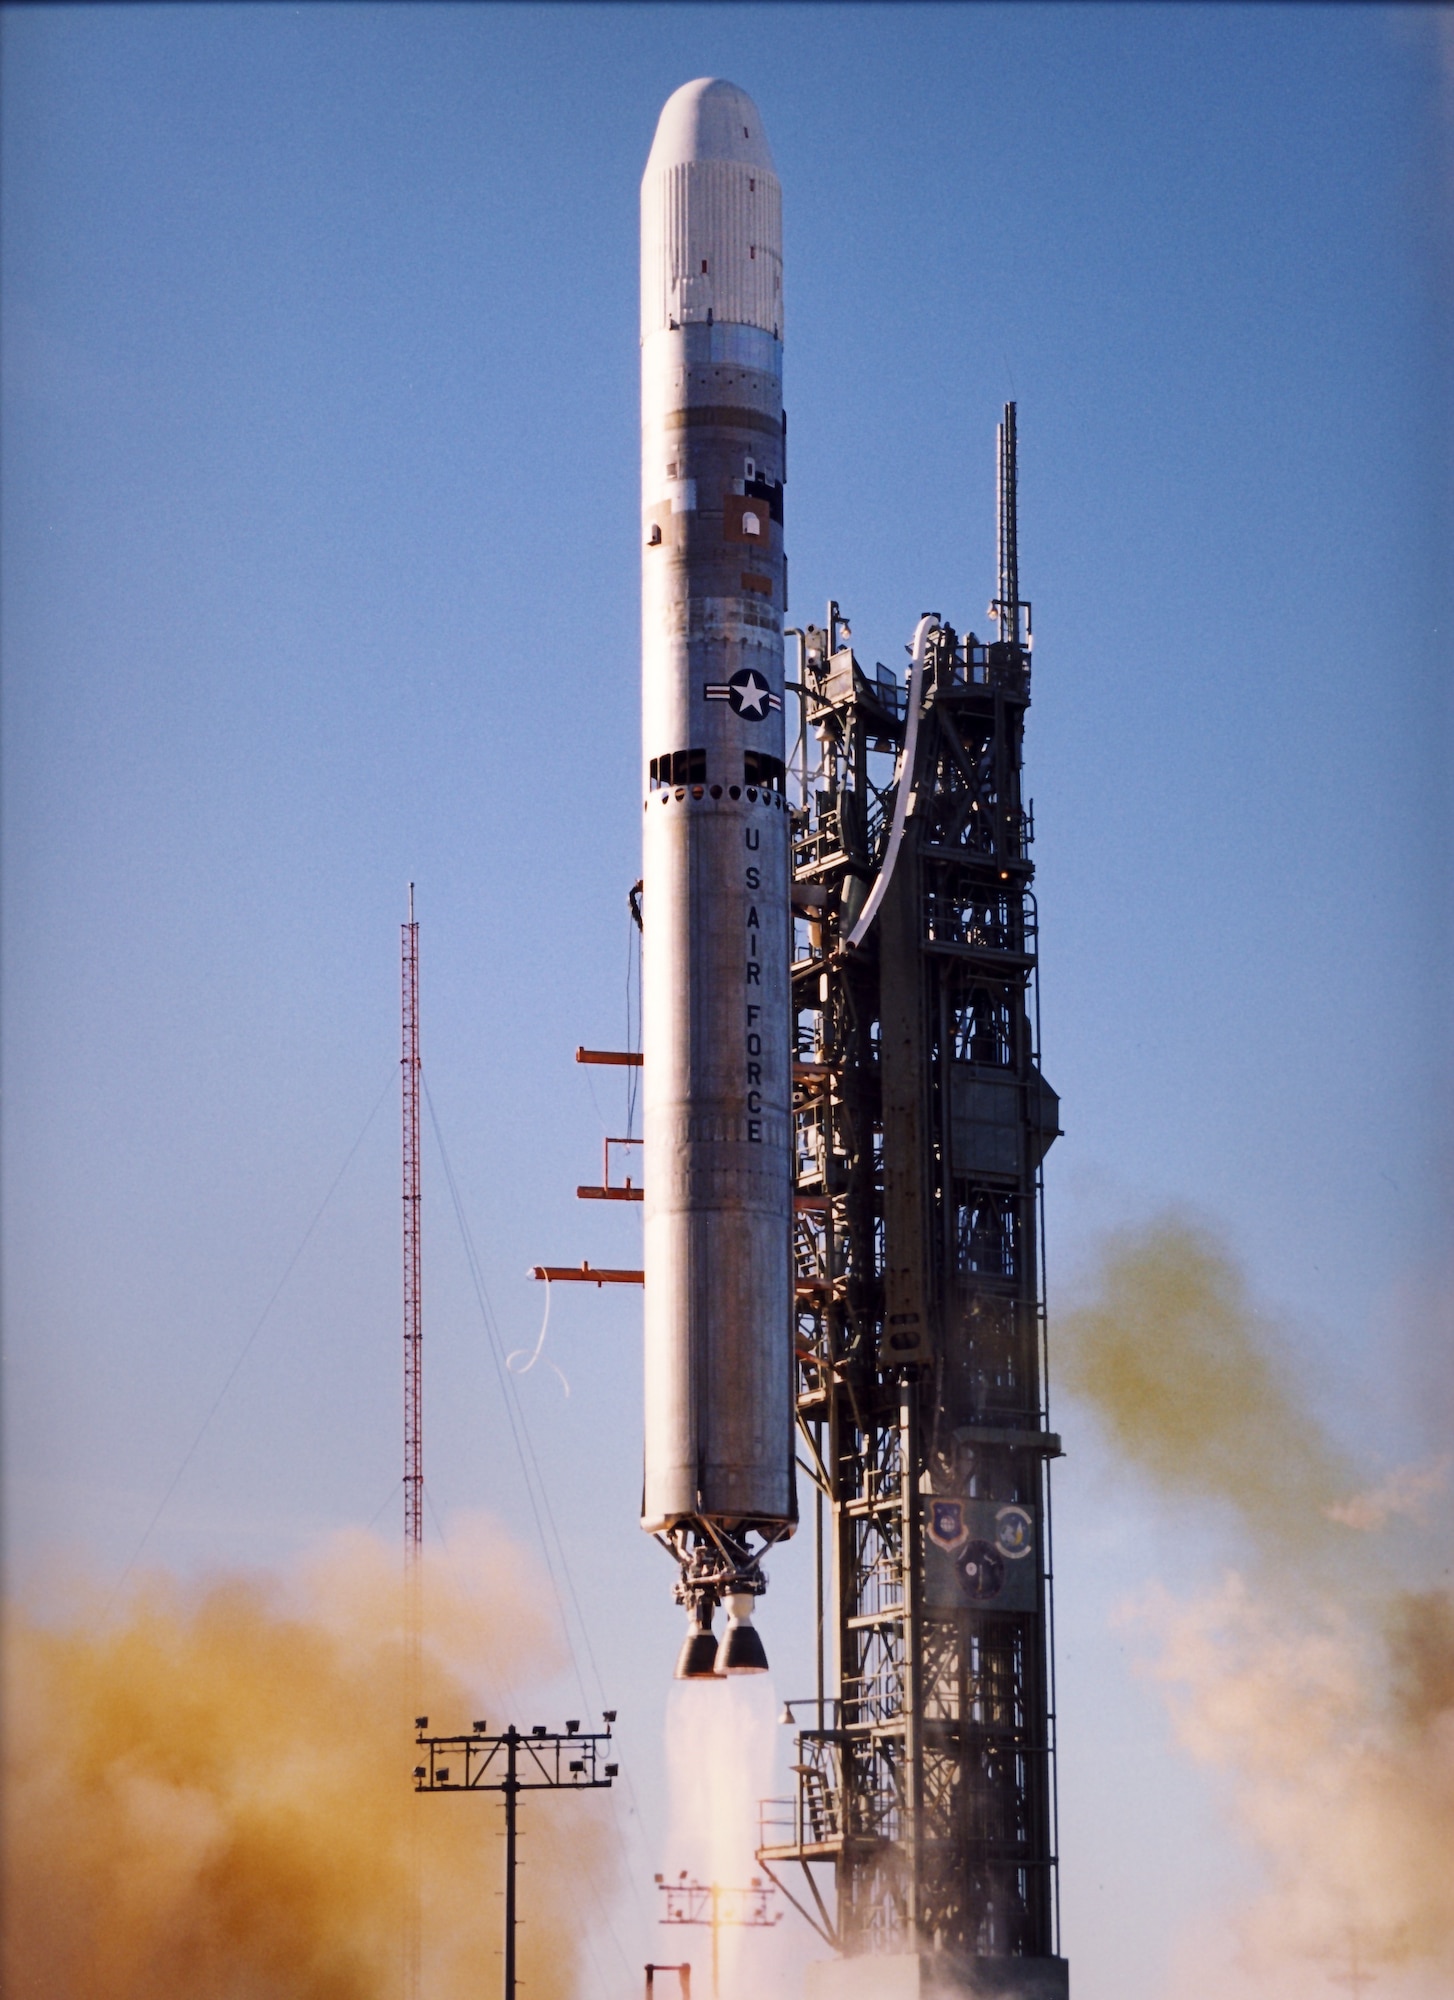 DMSP-14 launch